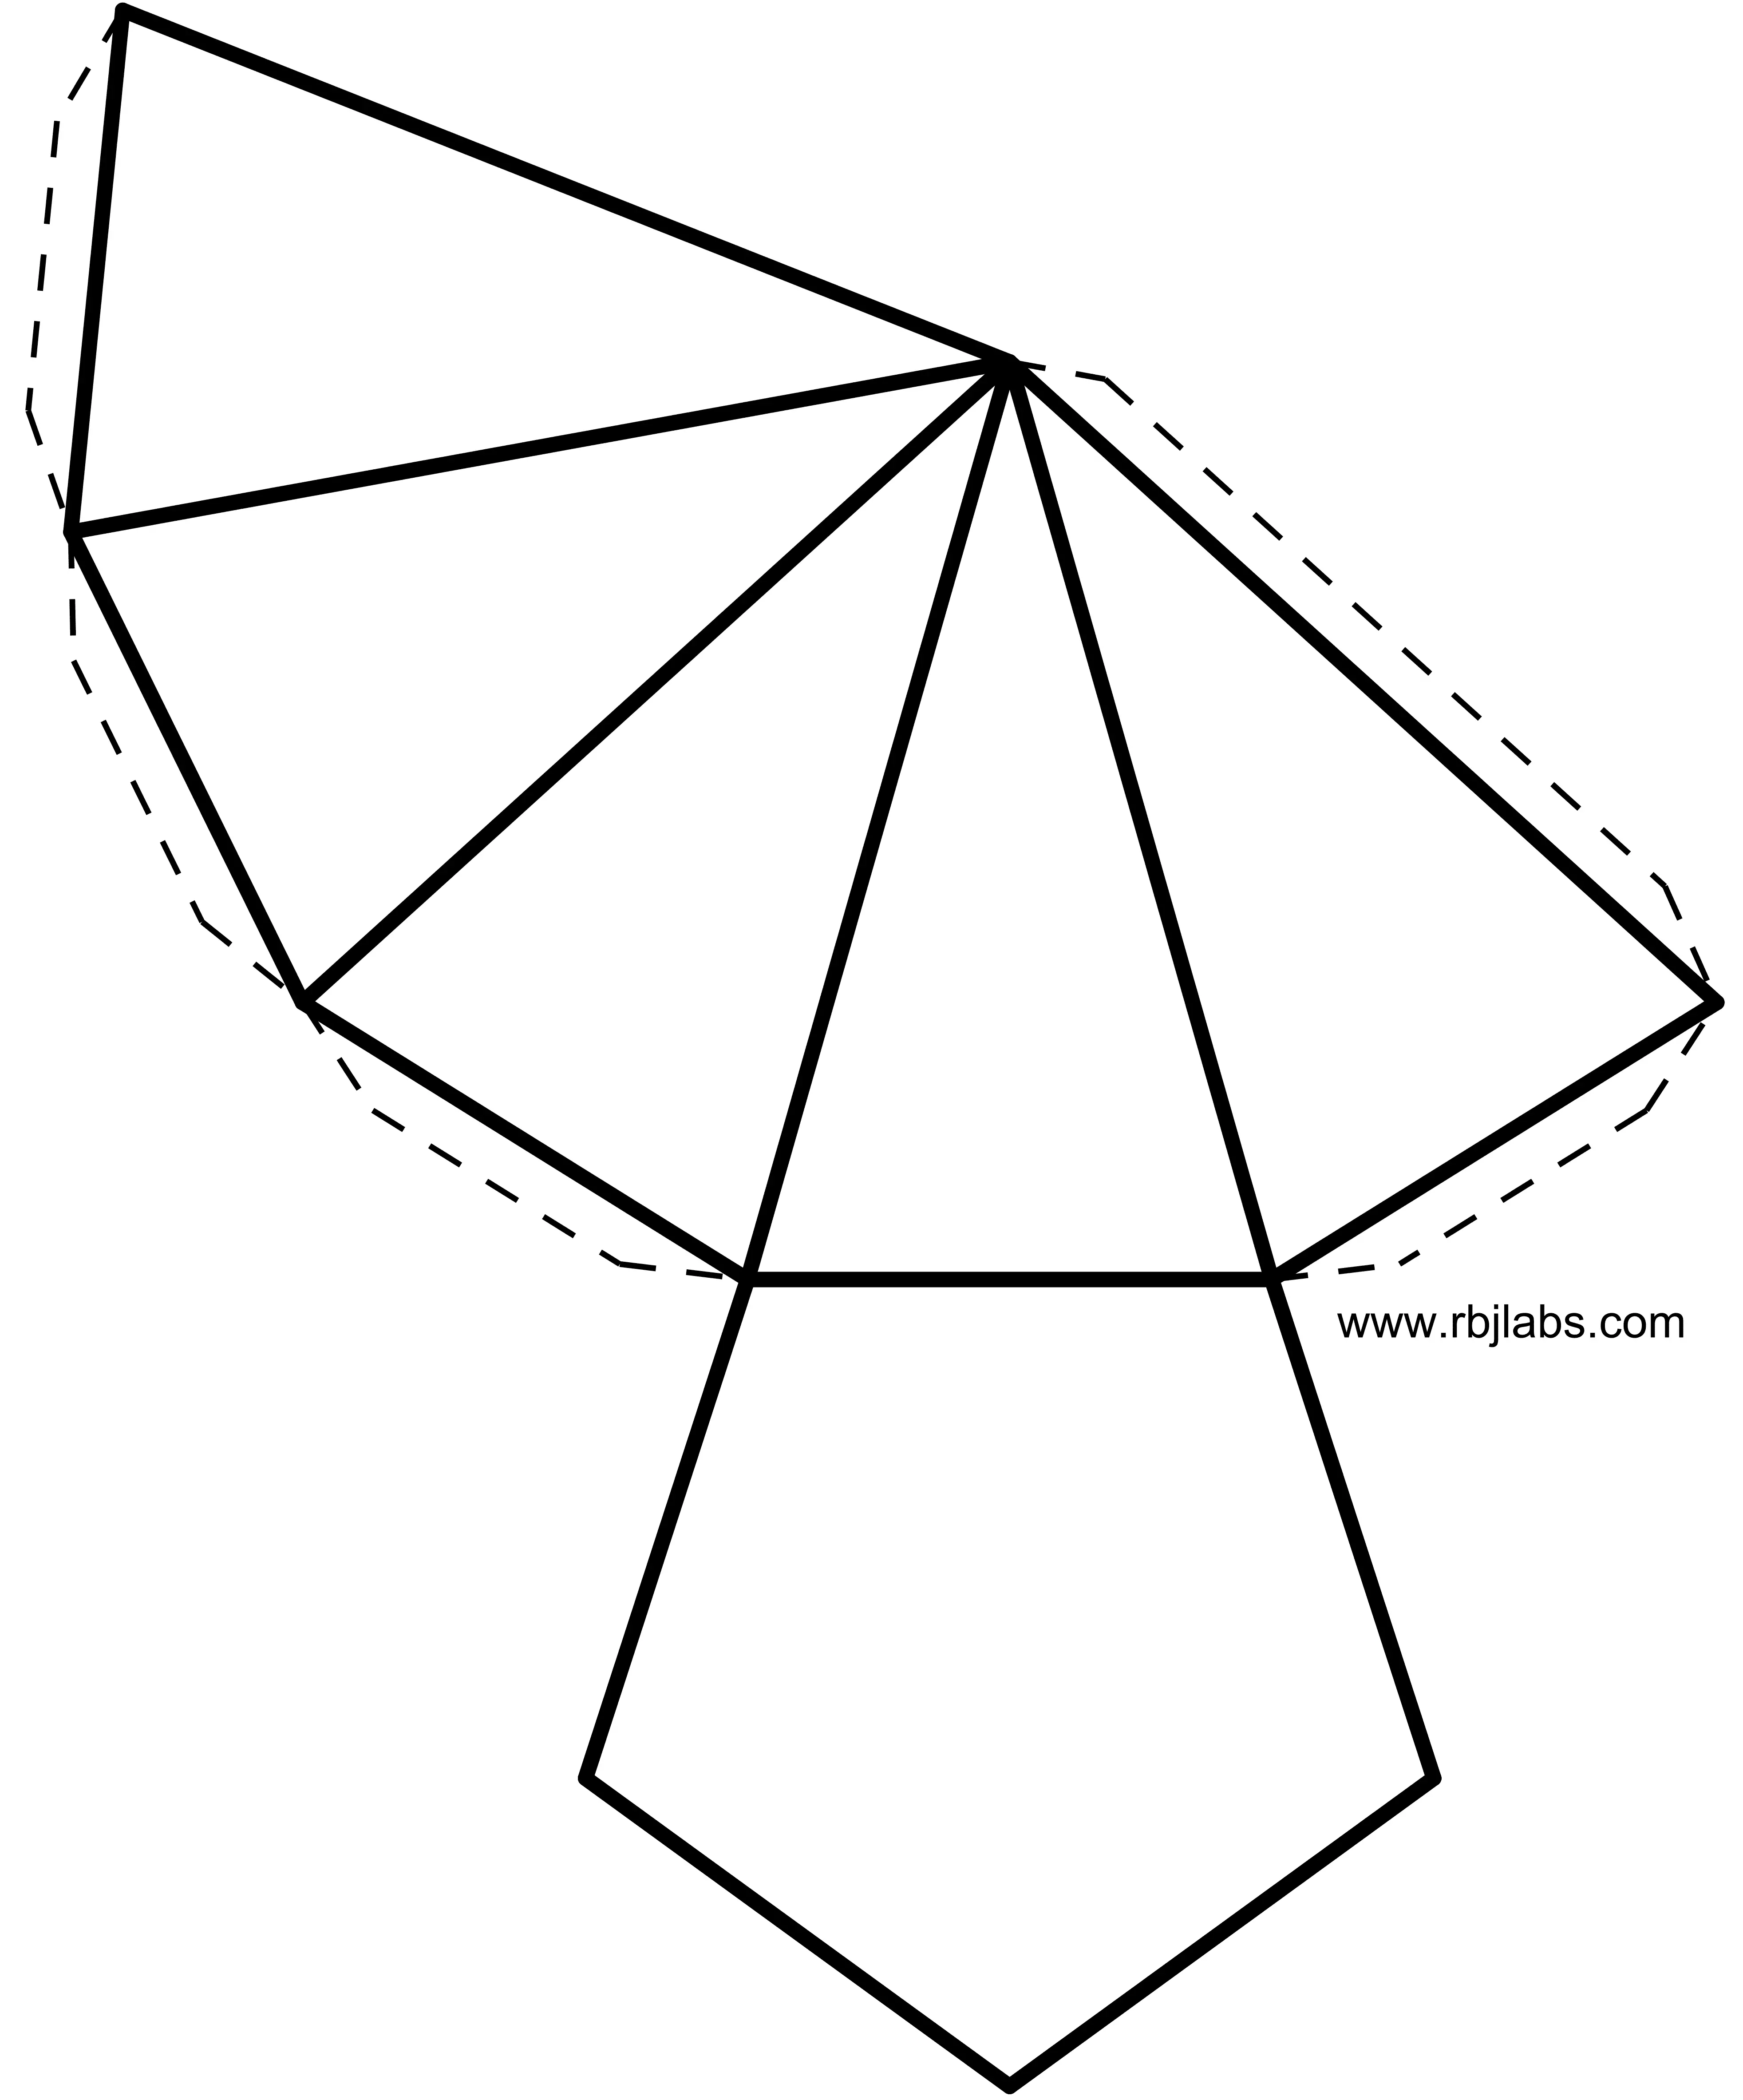 pentagonal pyramid